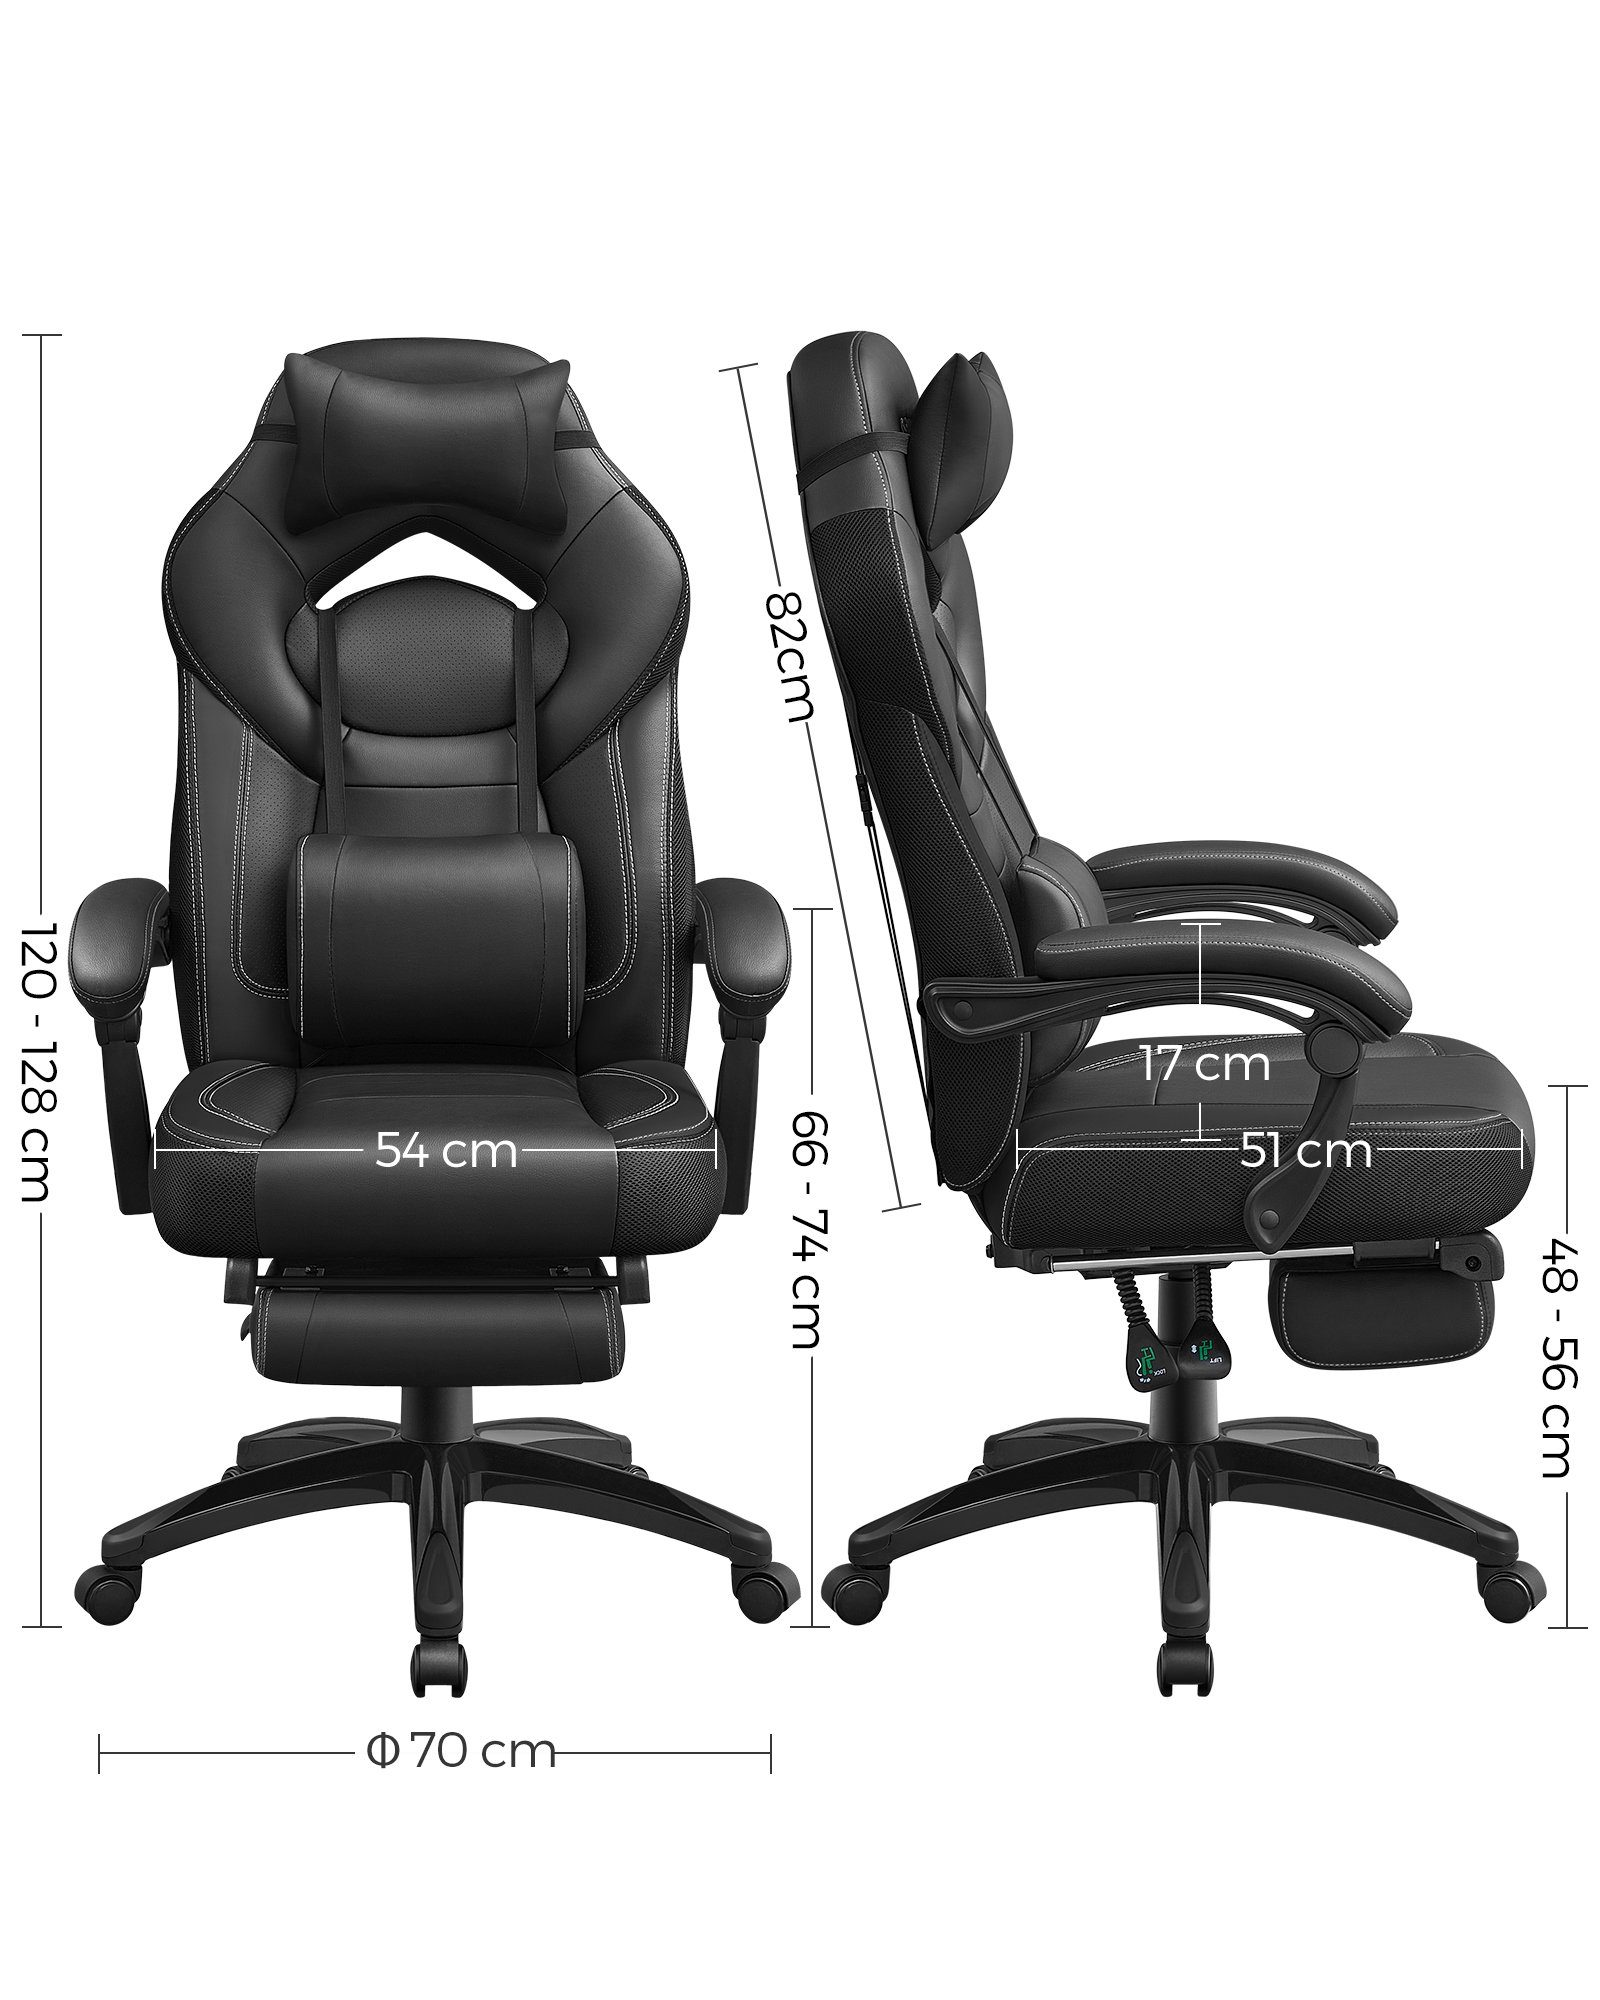 höhenverstellbar, Home-Office SONGMICS Bürostuhl, Gaming-Stuhl, schwarz